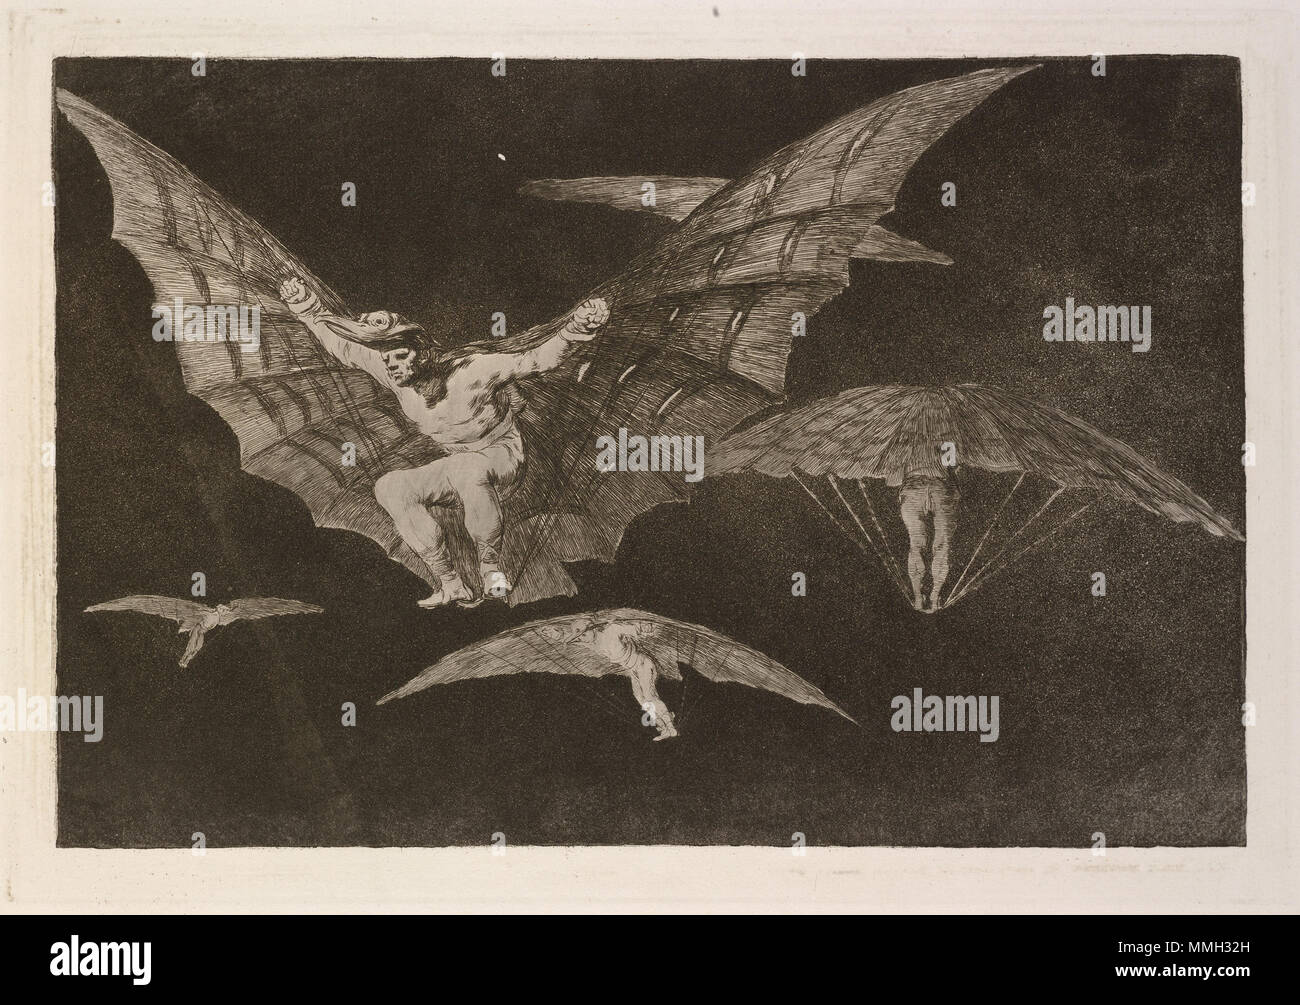 Francisco de Goya, Modo de volar (une façon de voler), espagnol, 1746 - 1828, publié 1864, eau-forte, aquatinte, pointe sèche, Rosenwald Collection Goya - Modo de volar (une façon de voler) 2 Banque D'Images